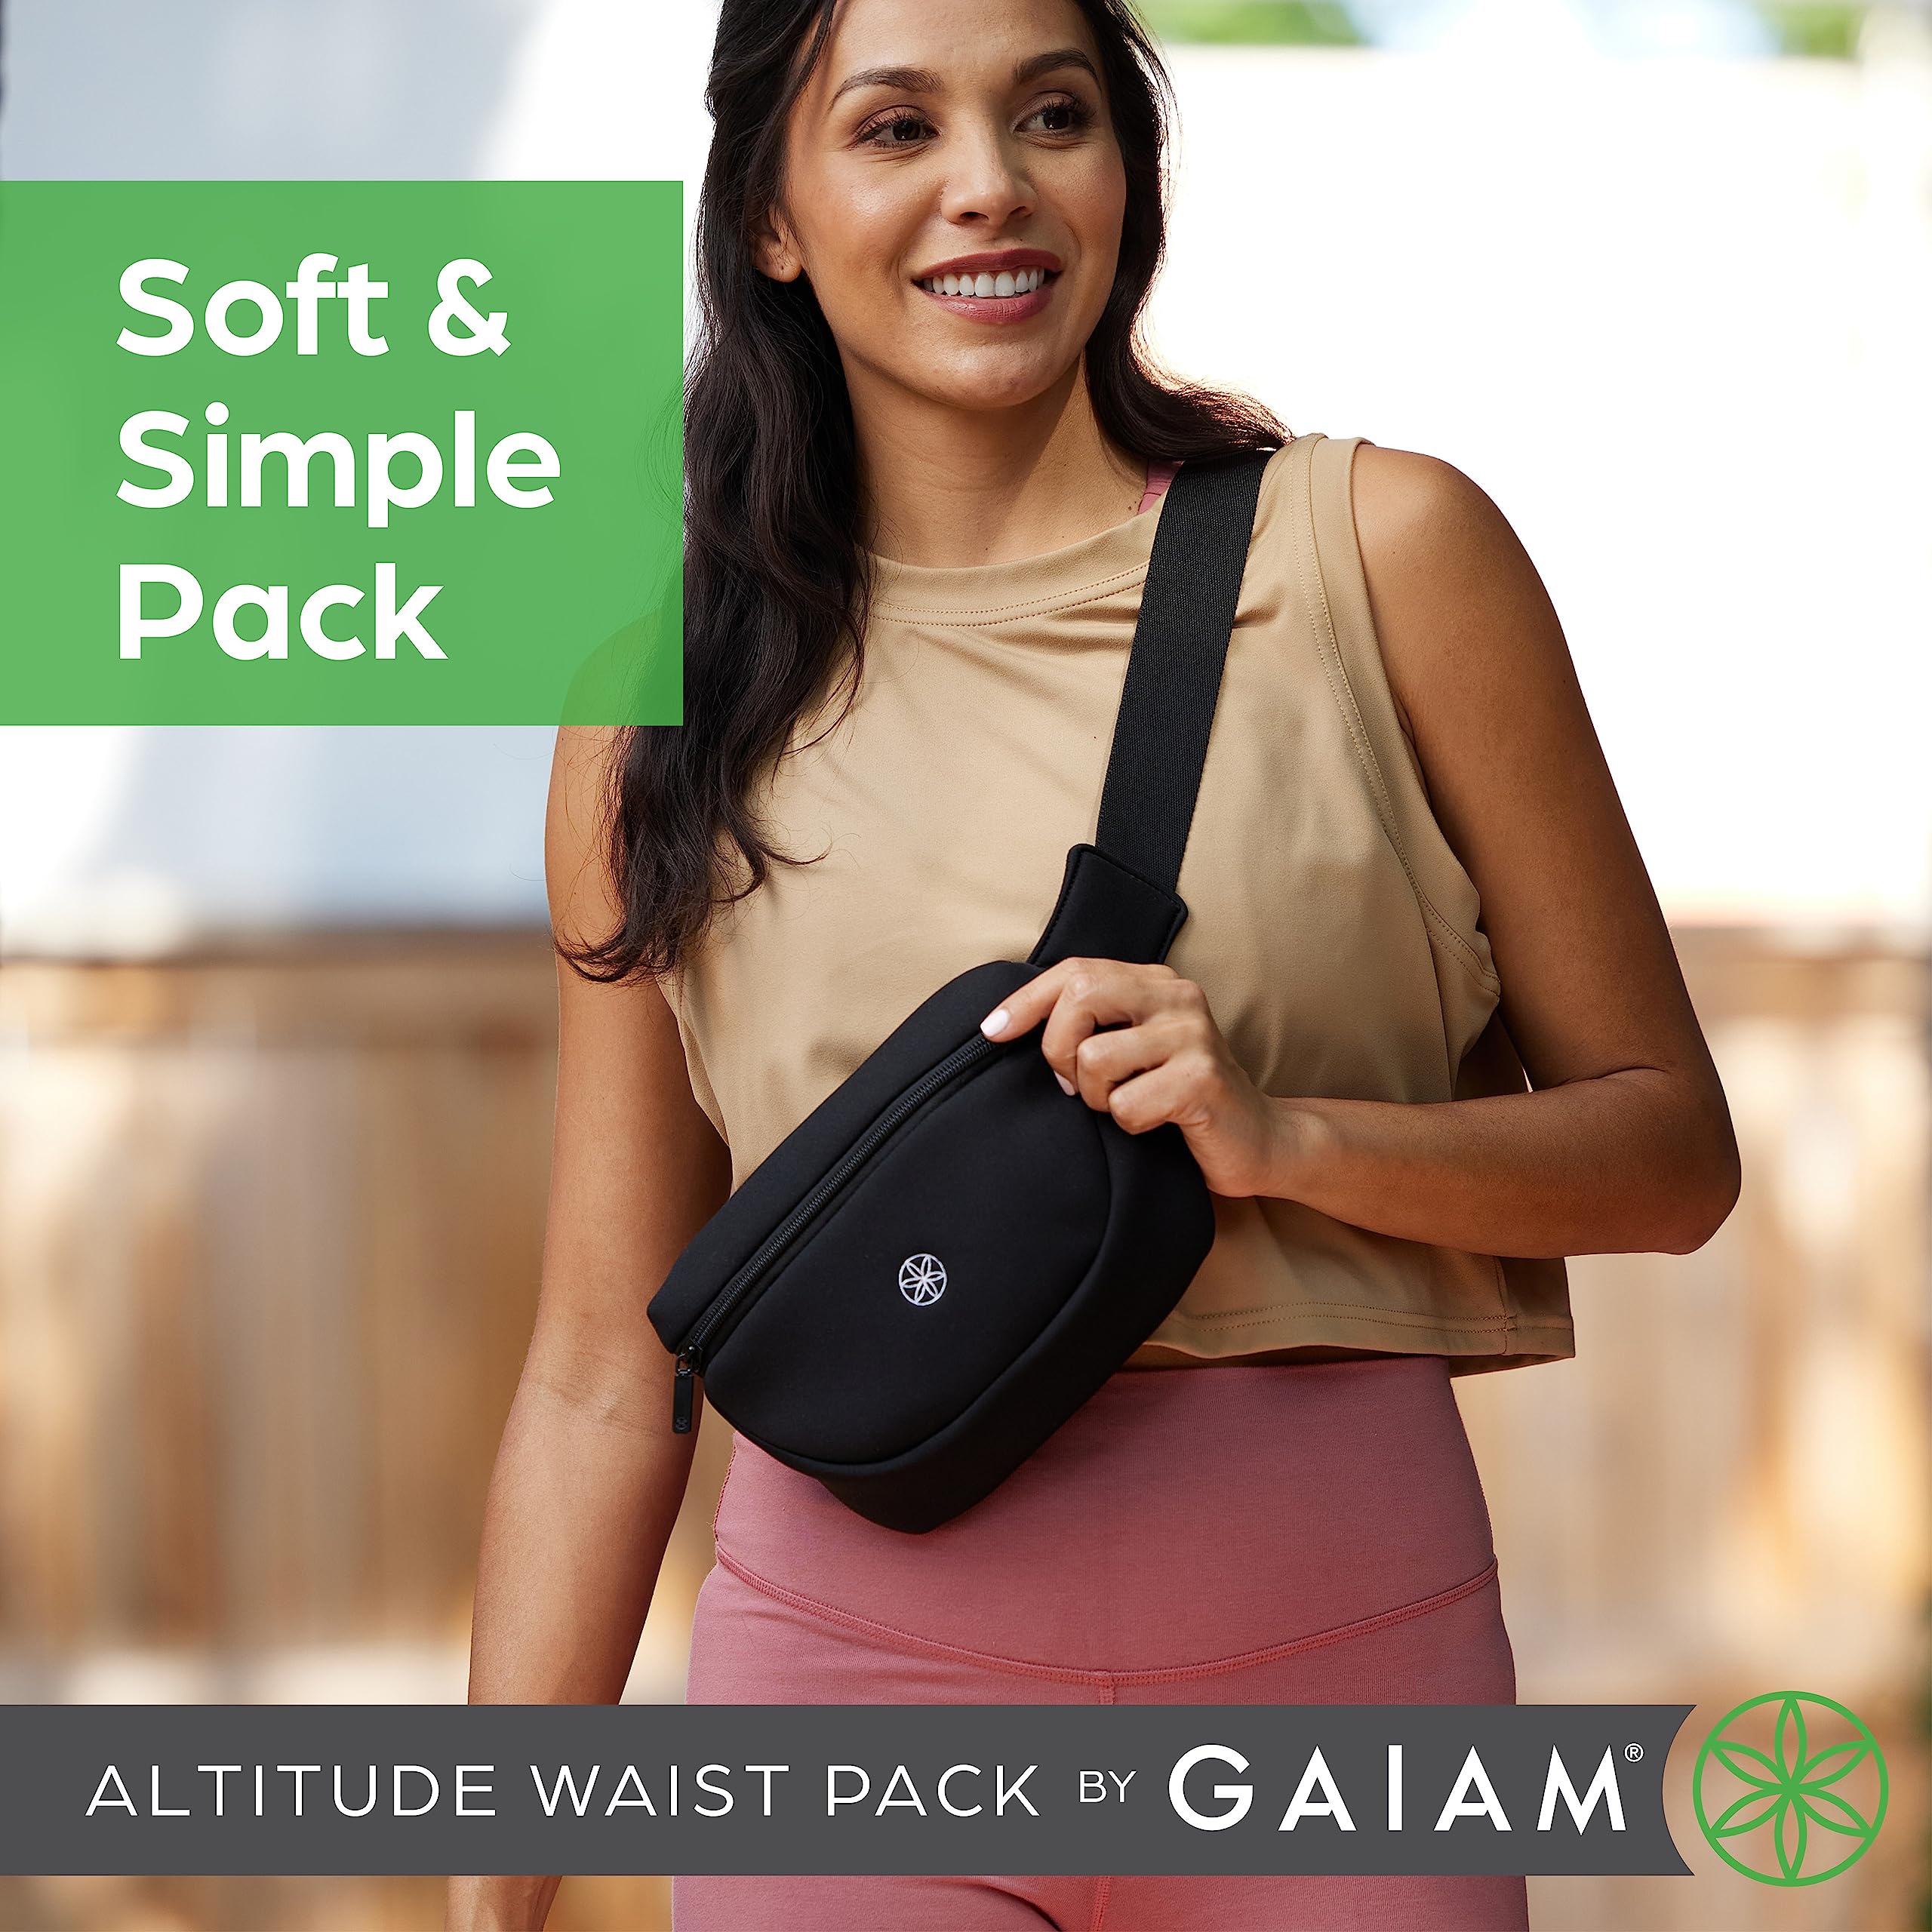 Gaiam Altitude Waist Pack - Storage Belt Bag for Women And Men - Adjustable Belt With Lightweight Pouch For Storing Essentials